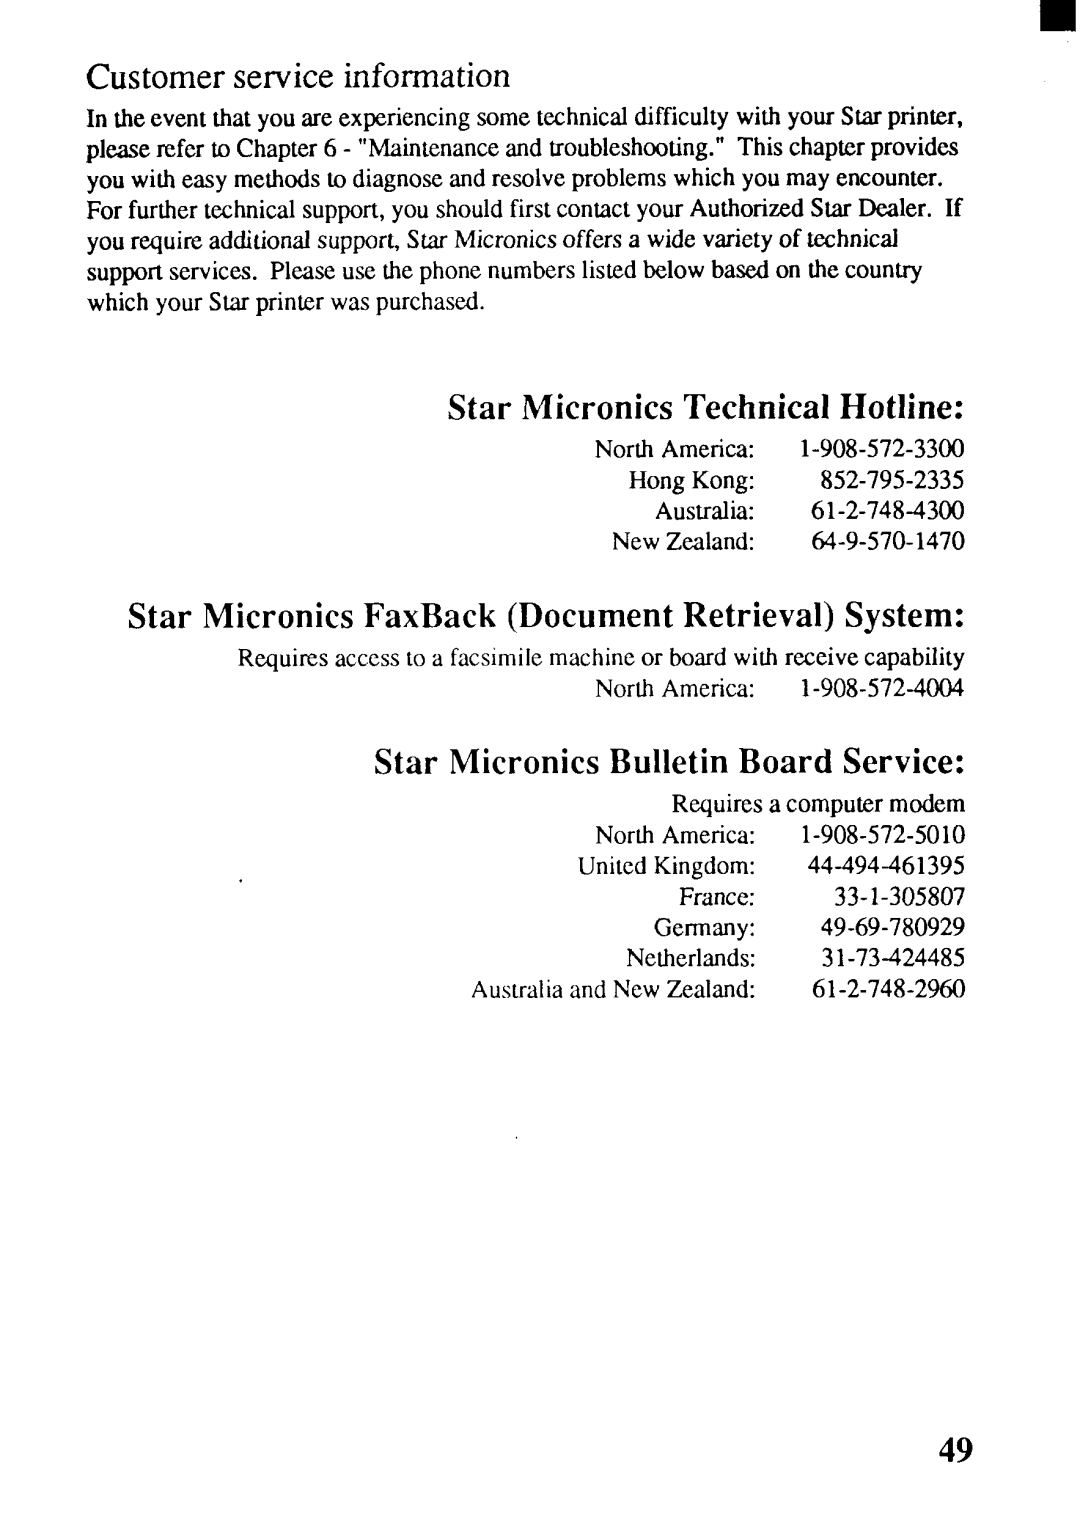 Star Micronics SJ-144MC user manual Customer service information, Star Micronics Technical Hotline 